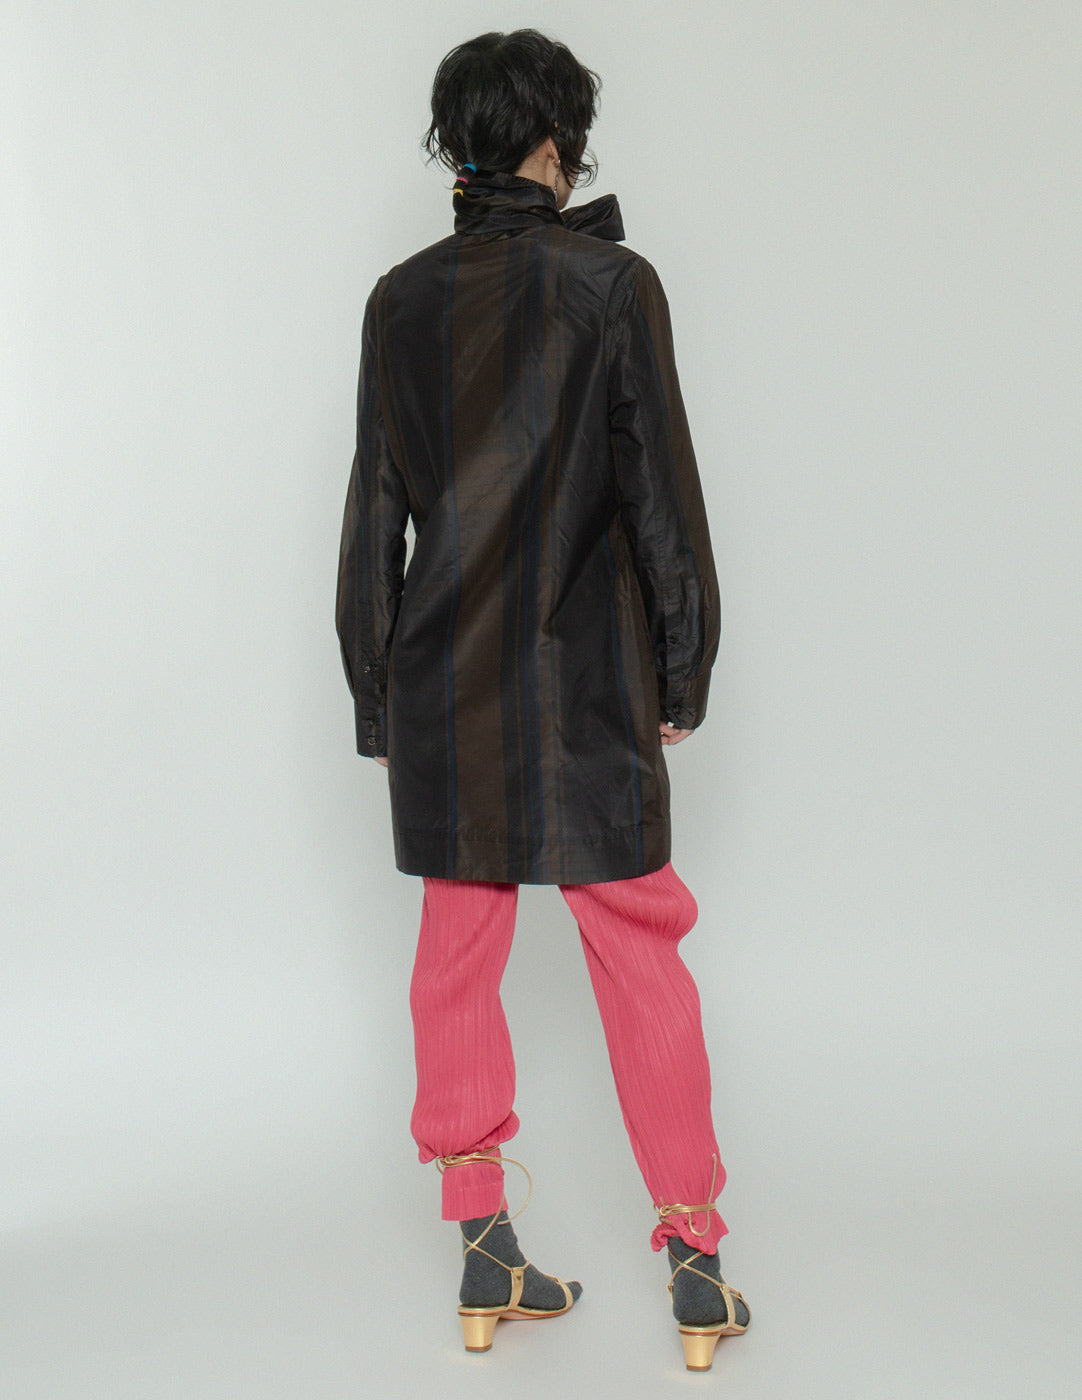 Yves Saint Laurent taffeta silk bow dress back view